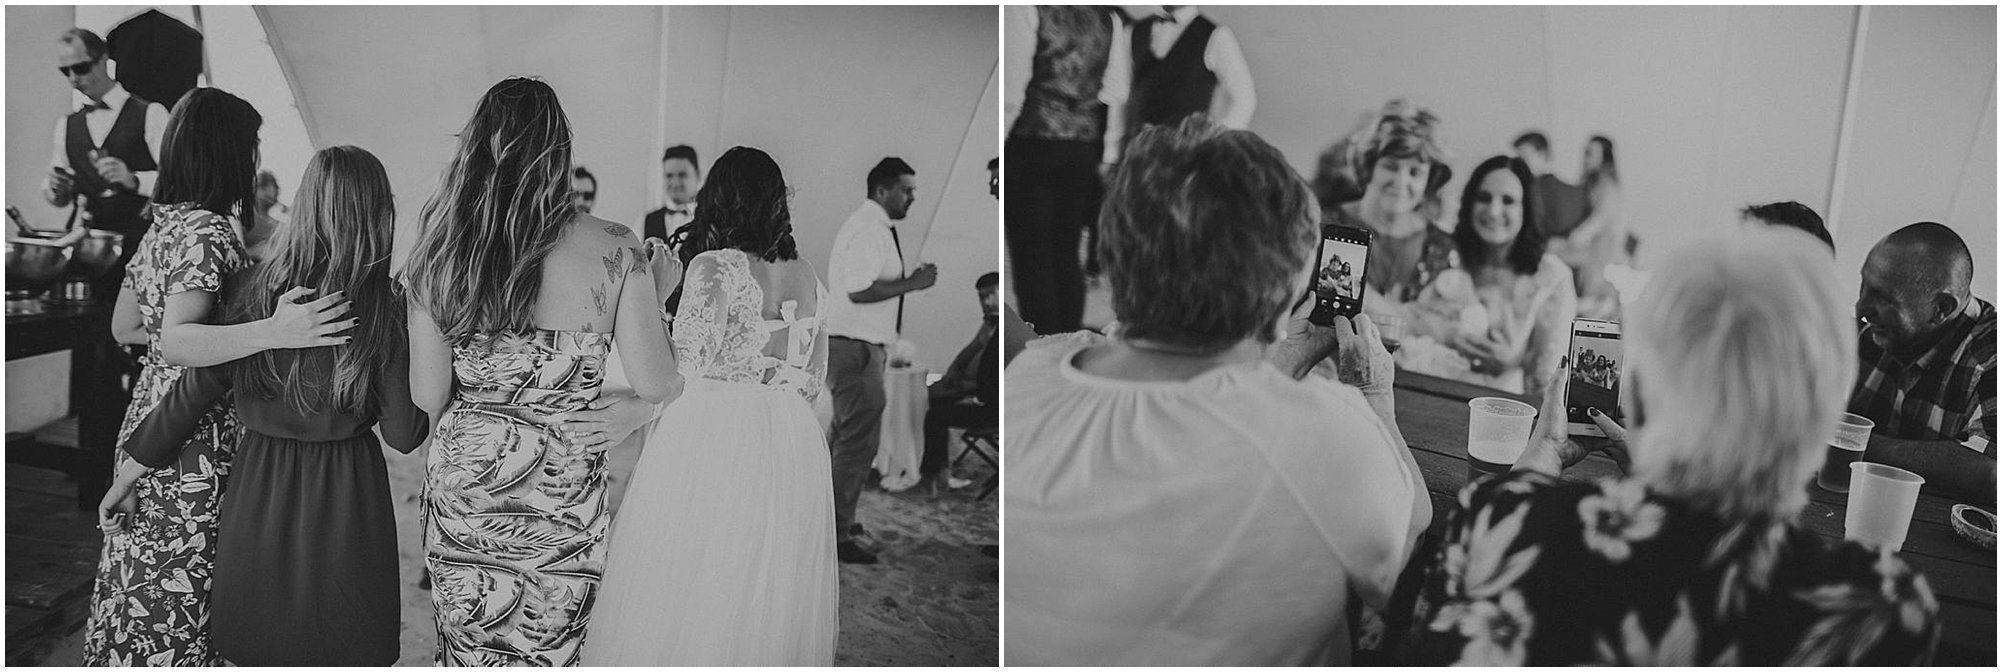 Strandkombuis_Wedding_yzerfontein_ruekruger-weddingphotography49.jpg